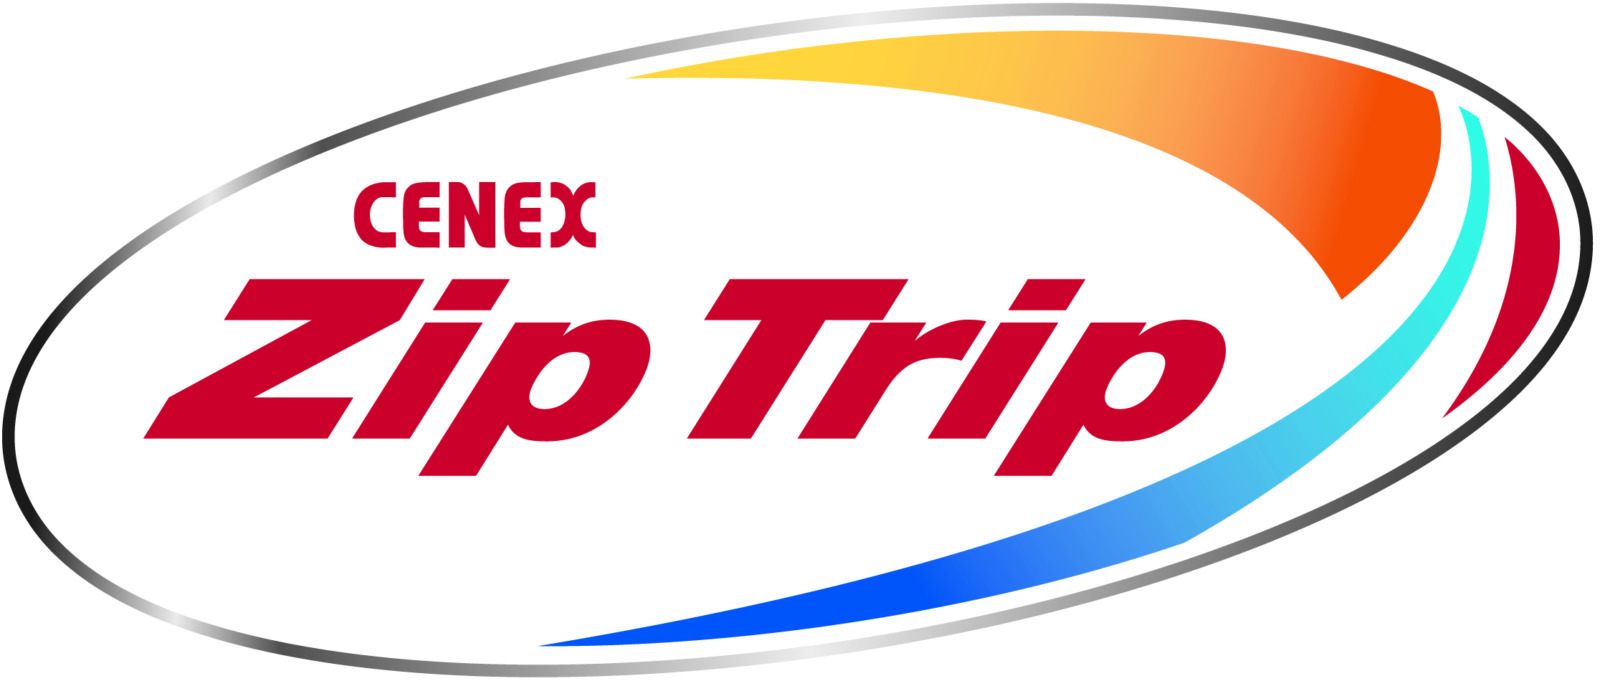 CENEX ZIP TRIP (TEAL)